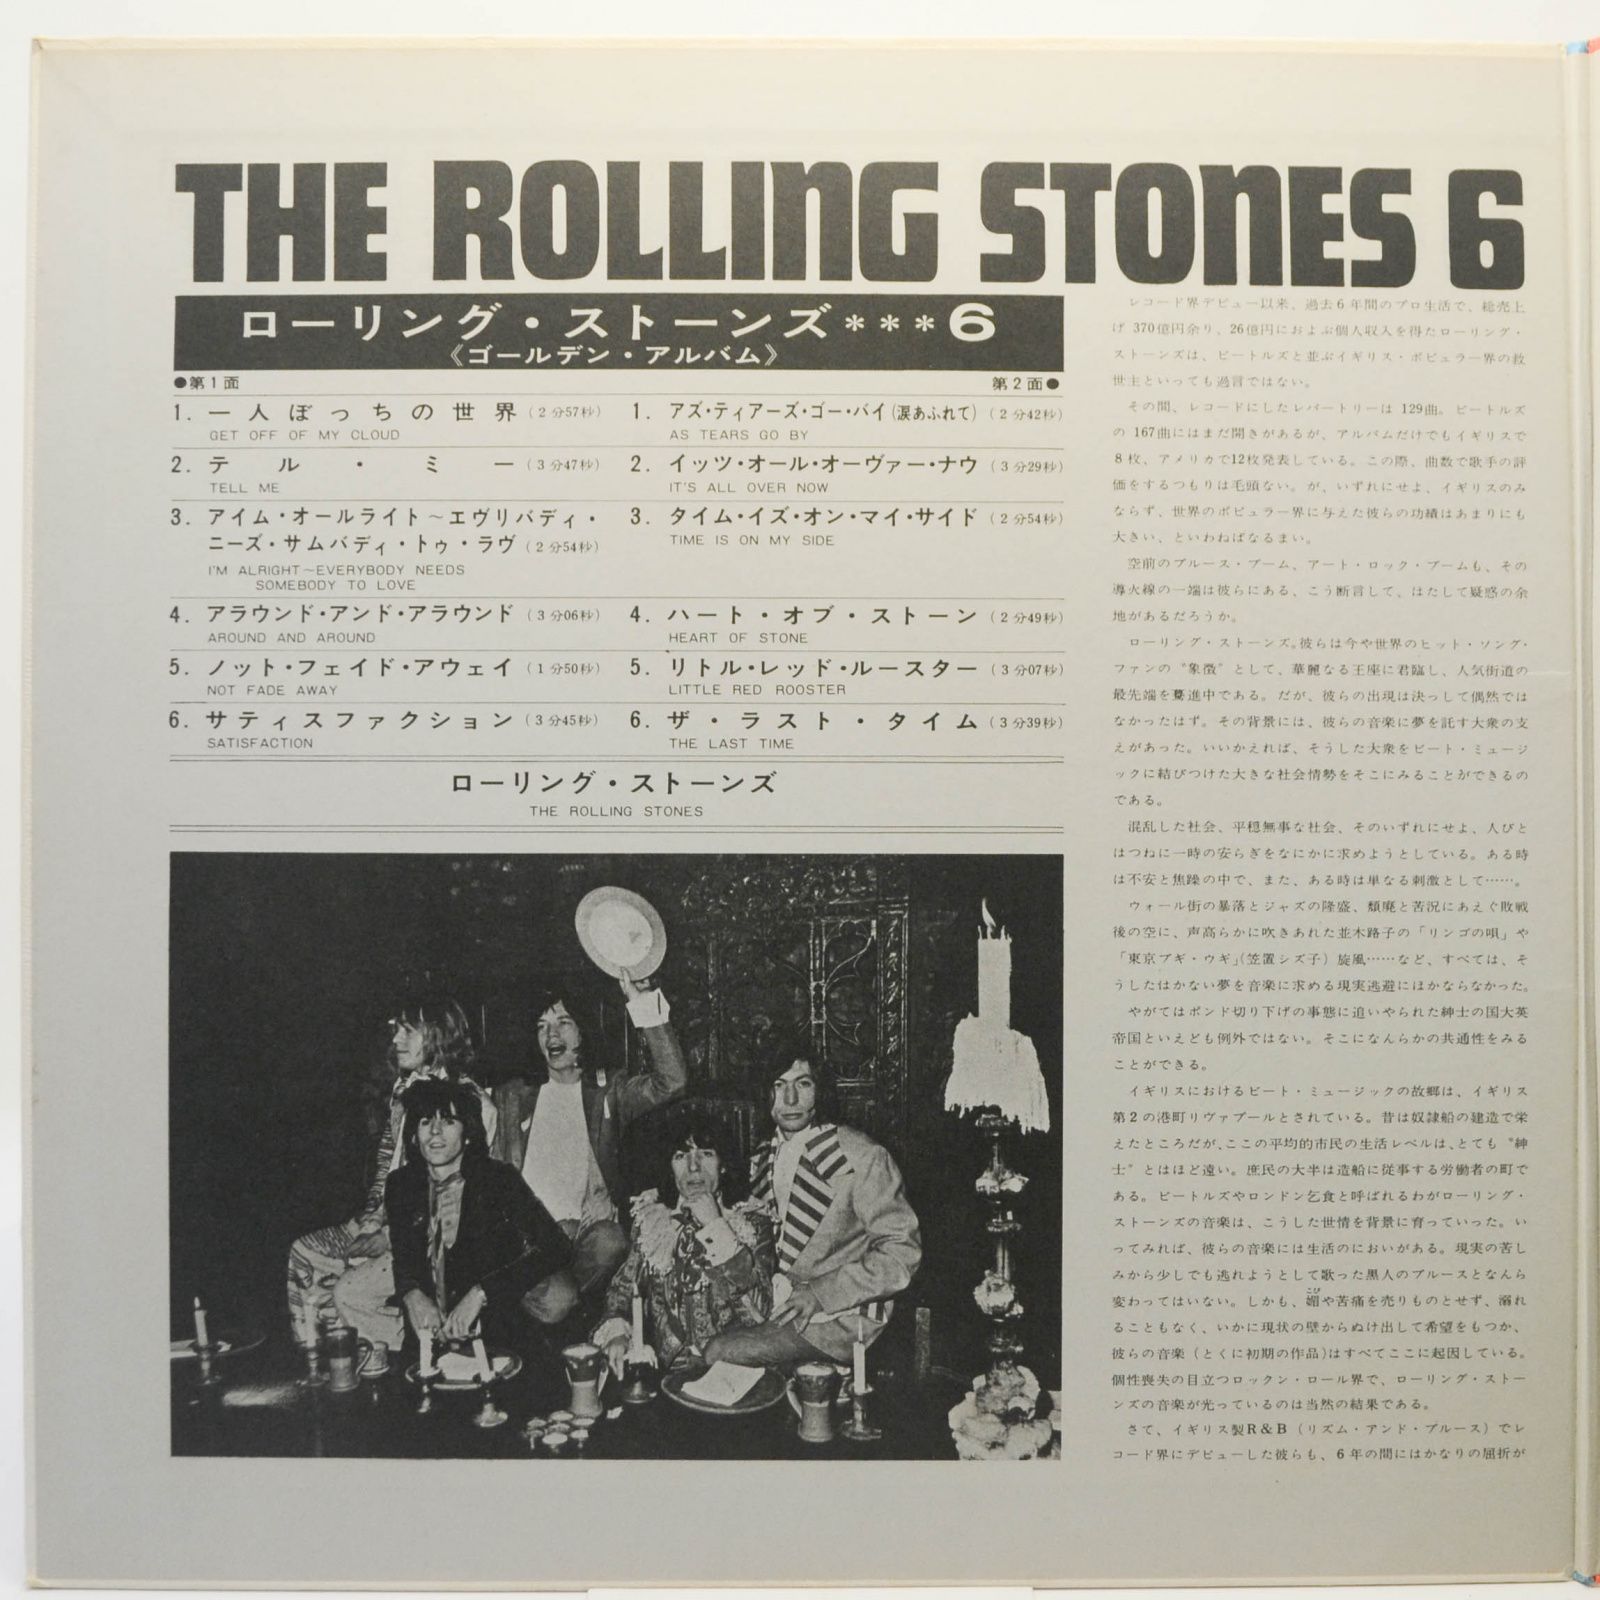 Rolling Stones — The Rolling Stones 6 - Golden Album, 1966